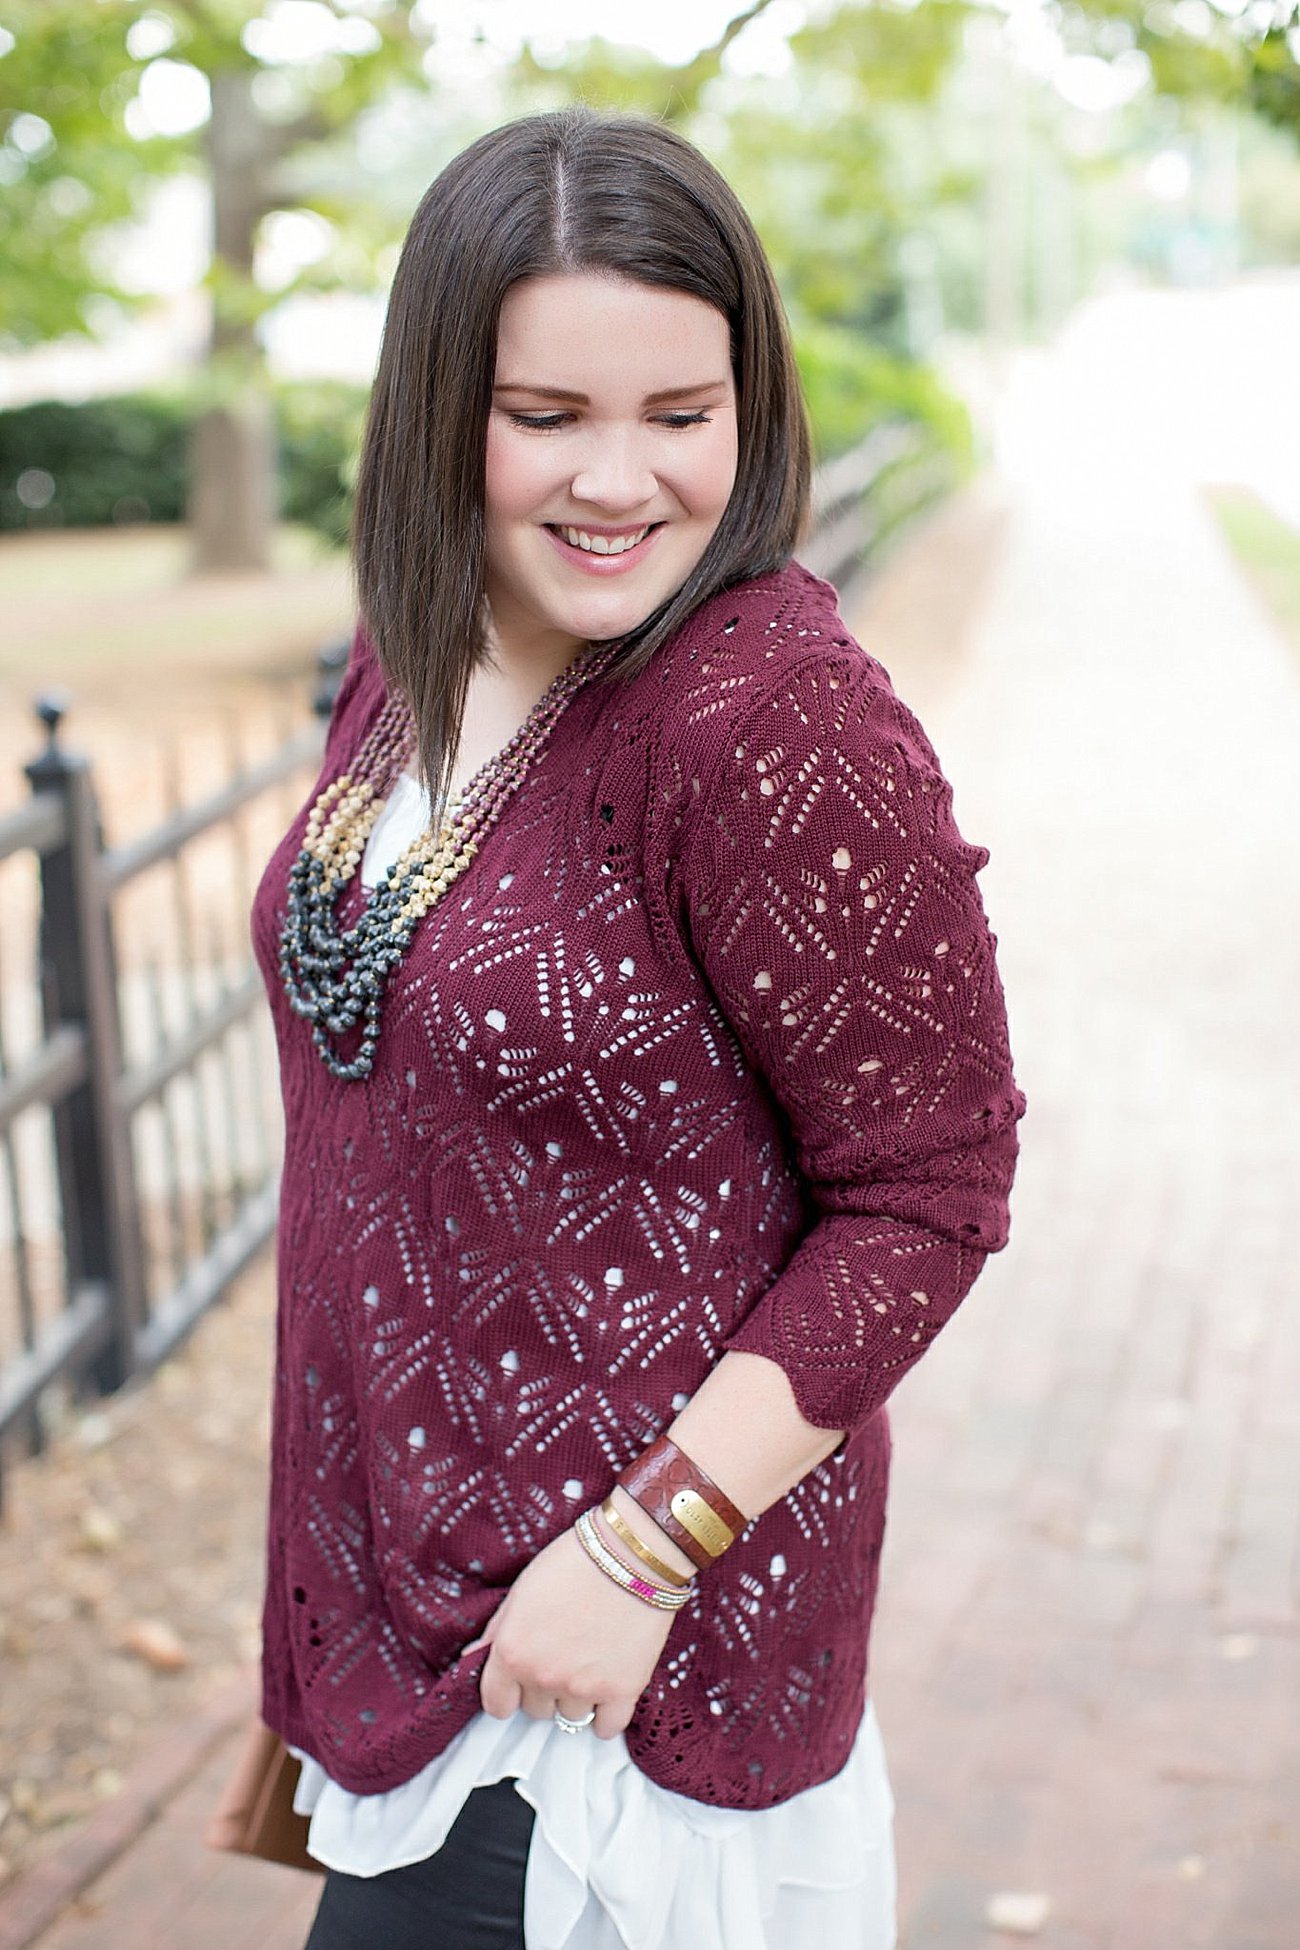 Grace & Lace pointelle sweater, ethical fall fashion | North Carolina fashion and lifestyle blogger (12)